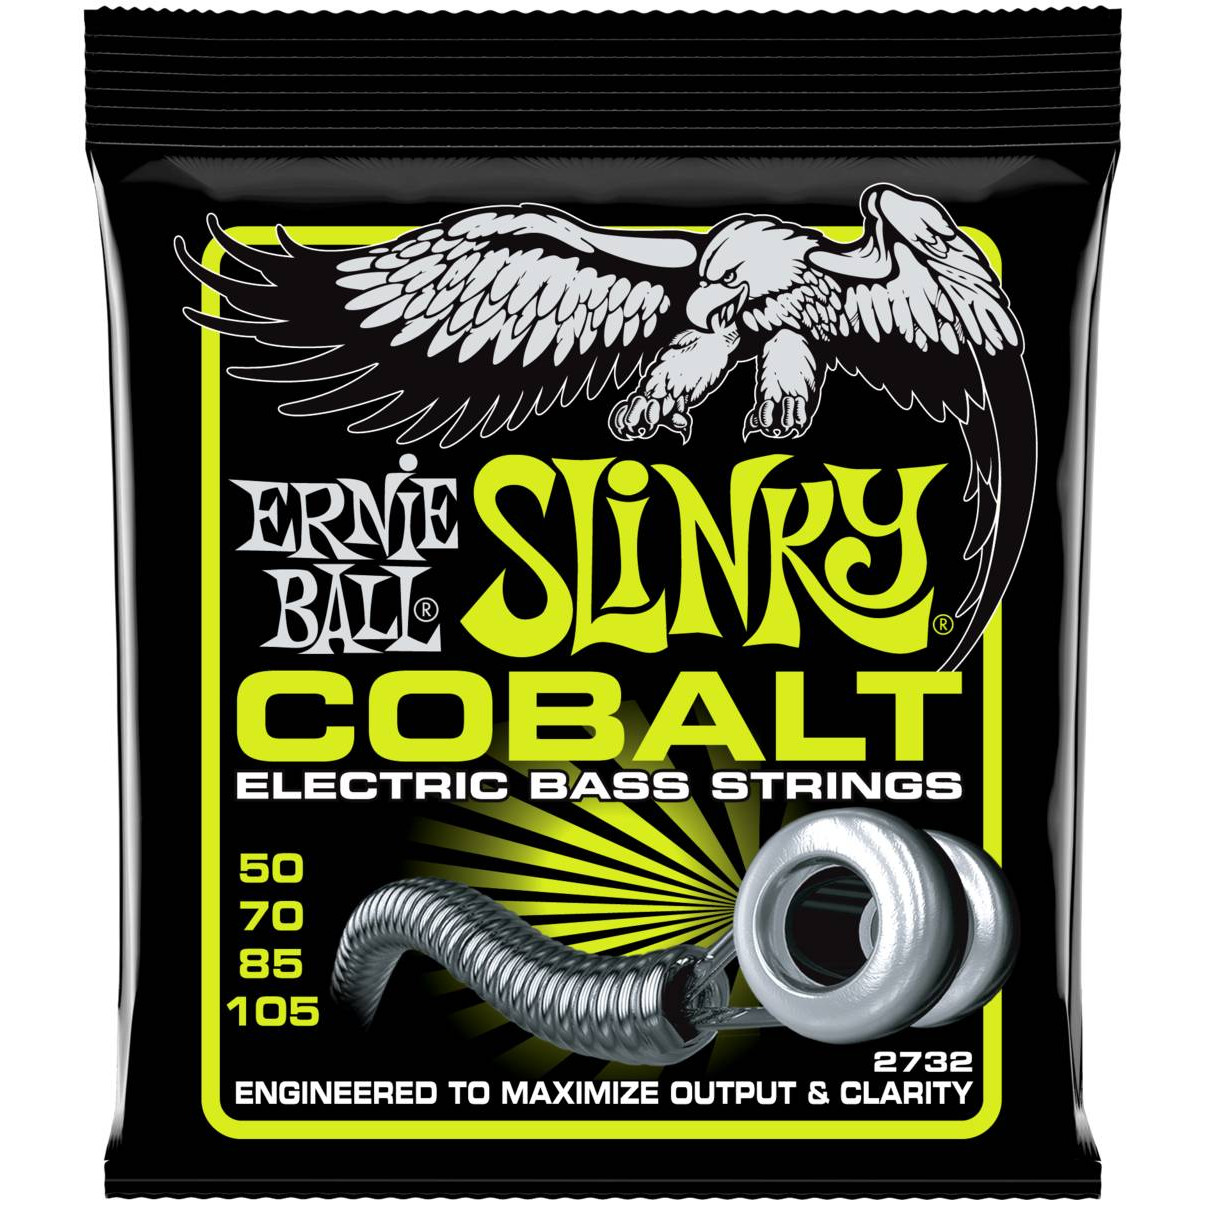 Струны Ernie Ball 2732 Slinky Cobalt Regular струны ernie ball 3832 coated slinky regular